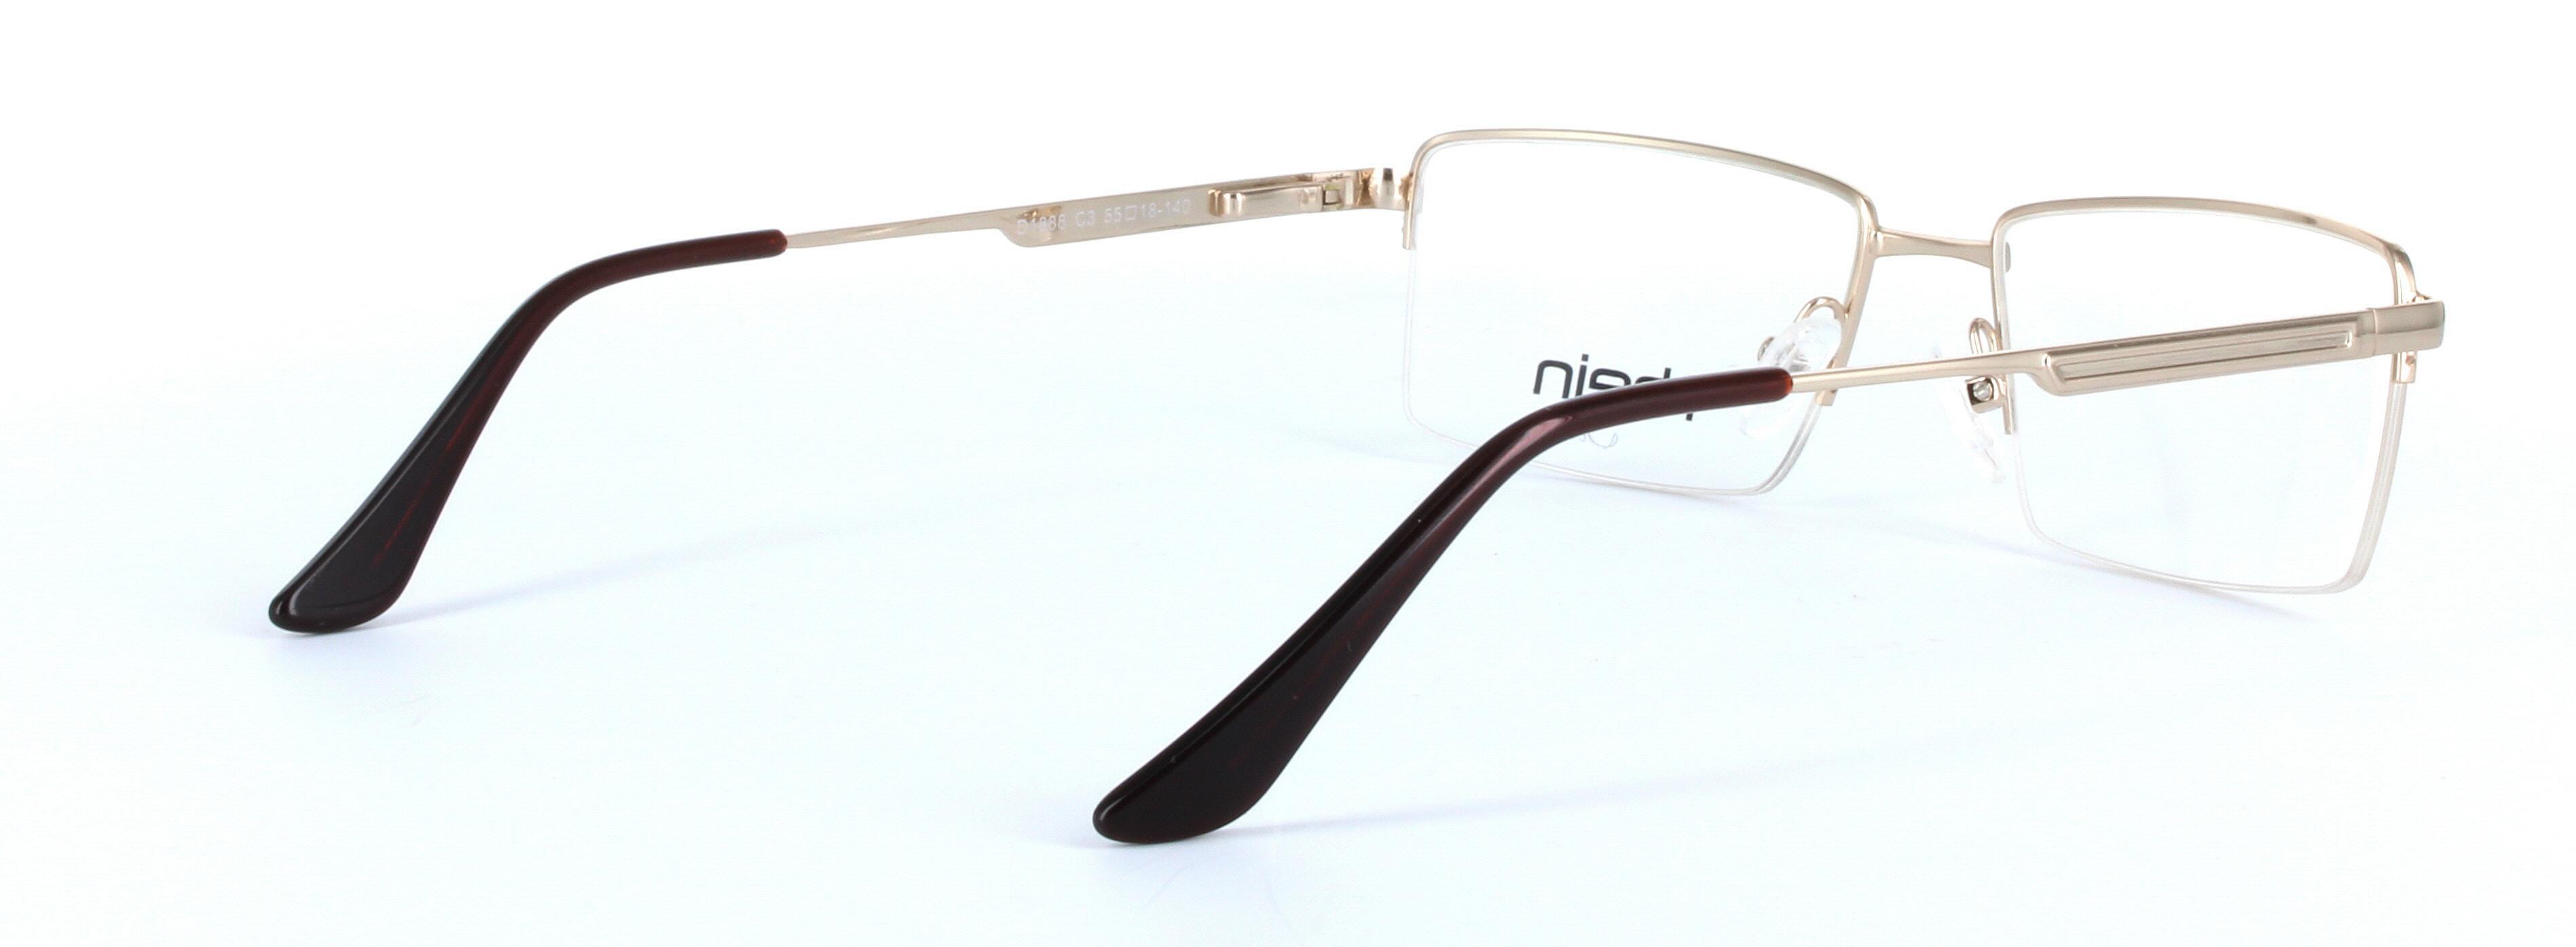 Highfield Gold Semi Rimless Rectangular Metal Glasses - Image View 4